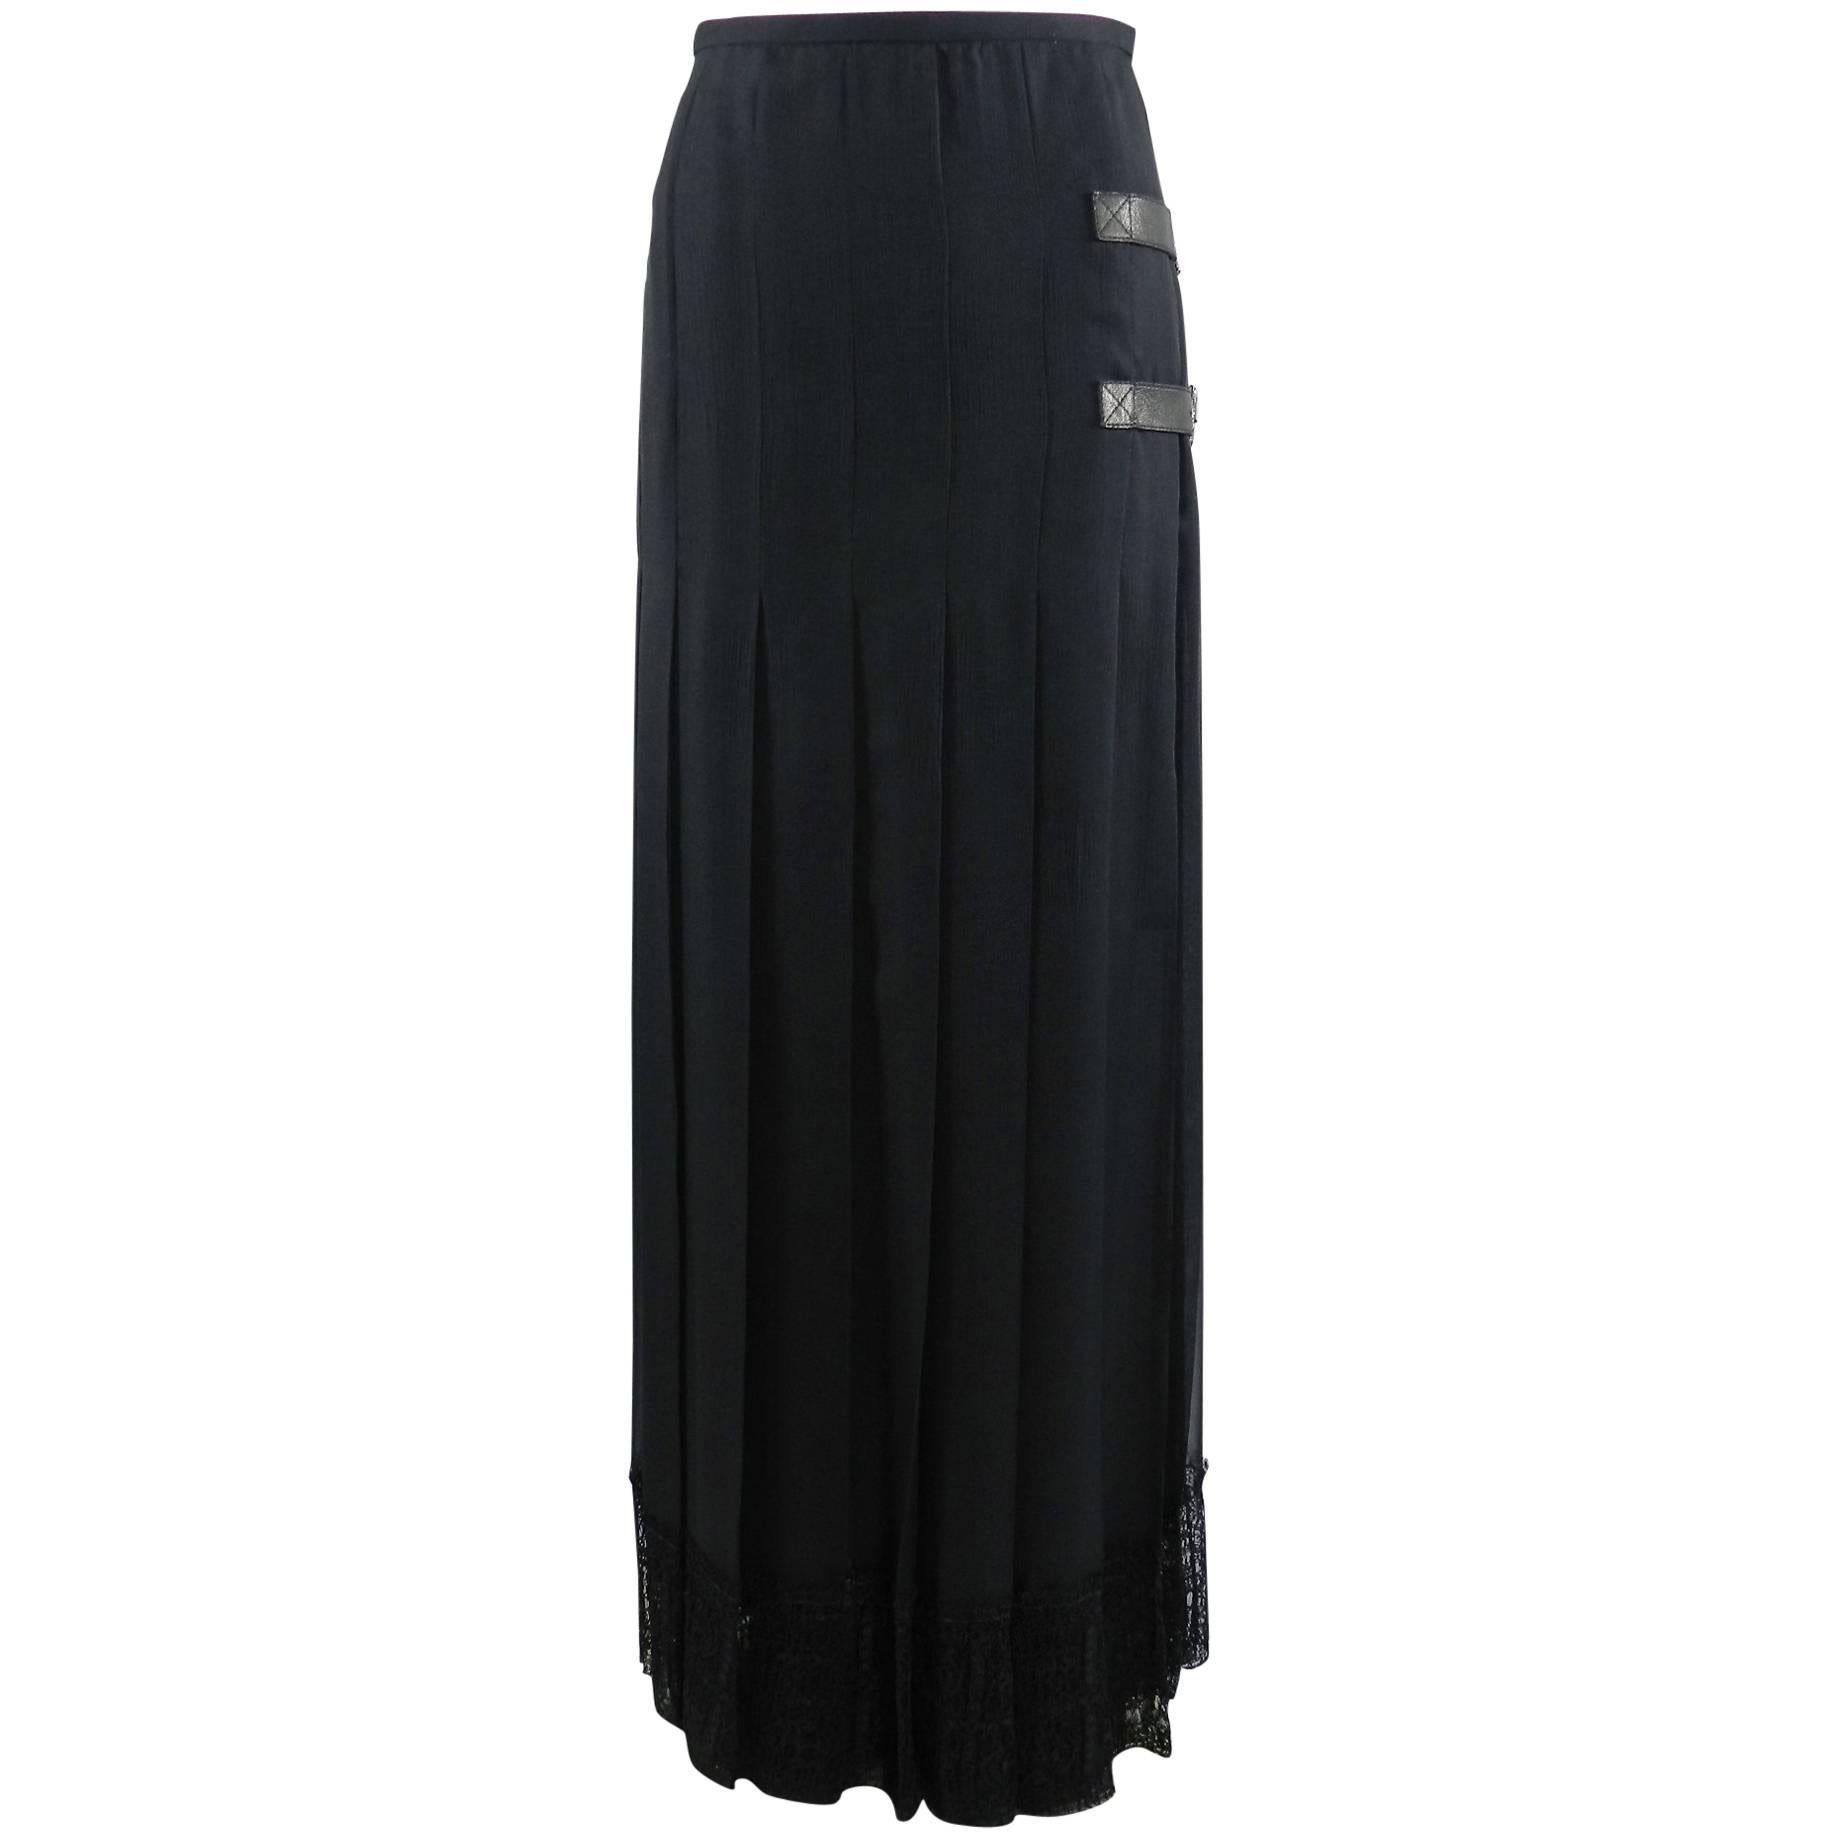 Chanel Edinburgh 13A 2013 Runway Long Black silk Skirt with Lace Hem